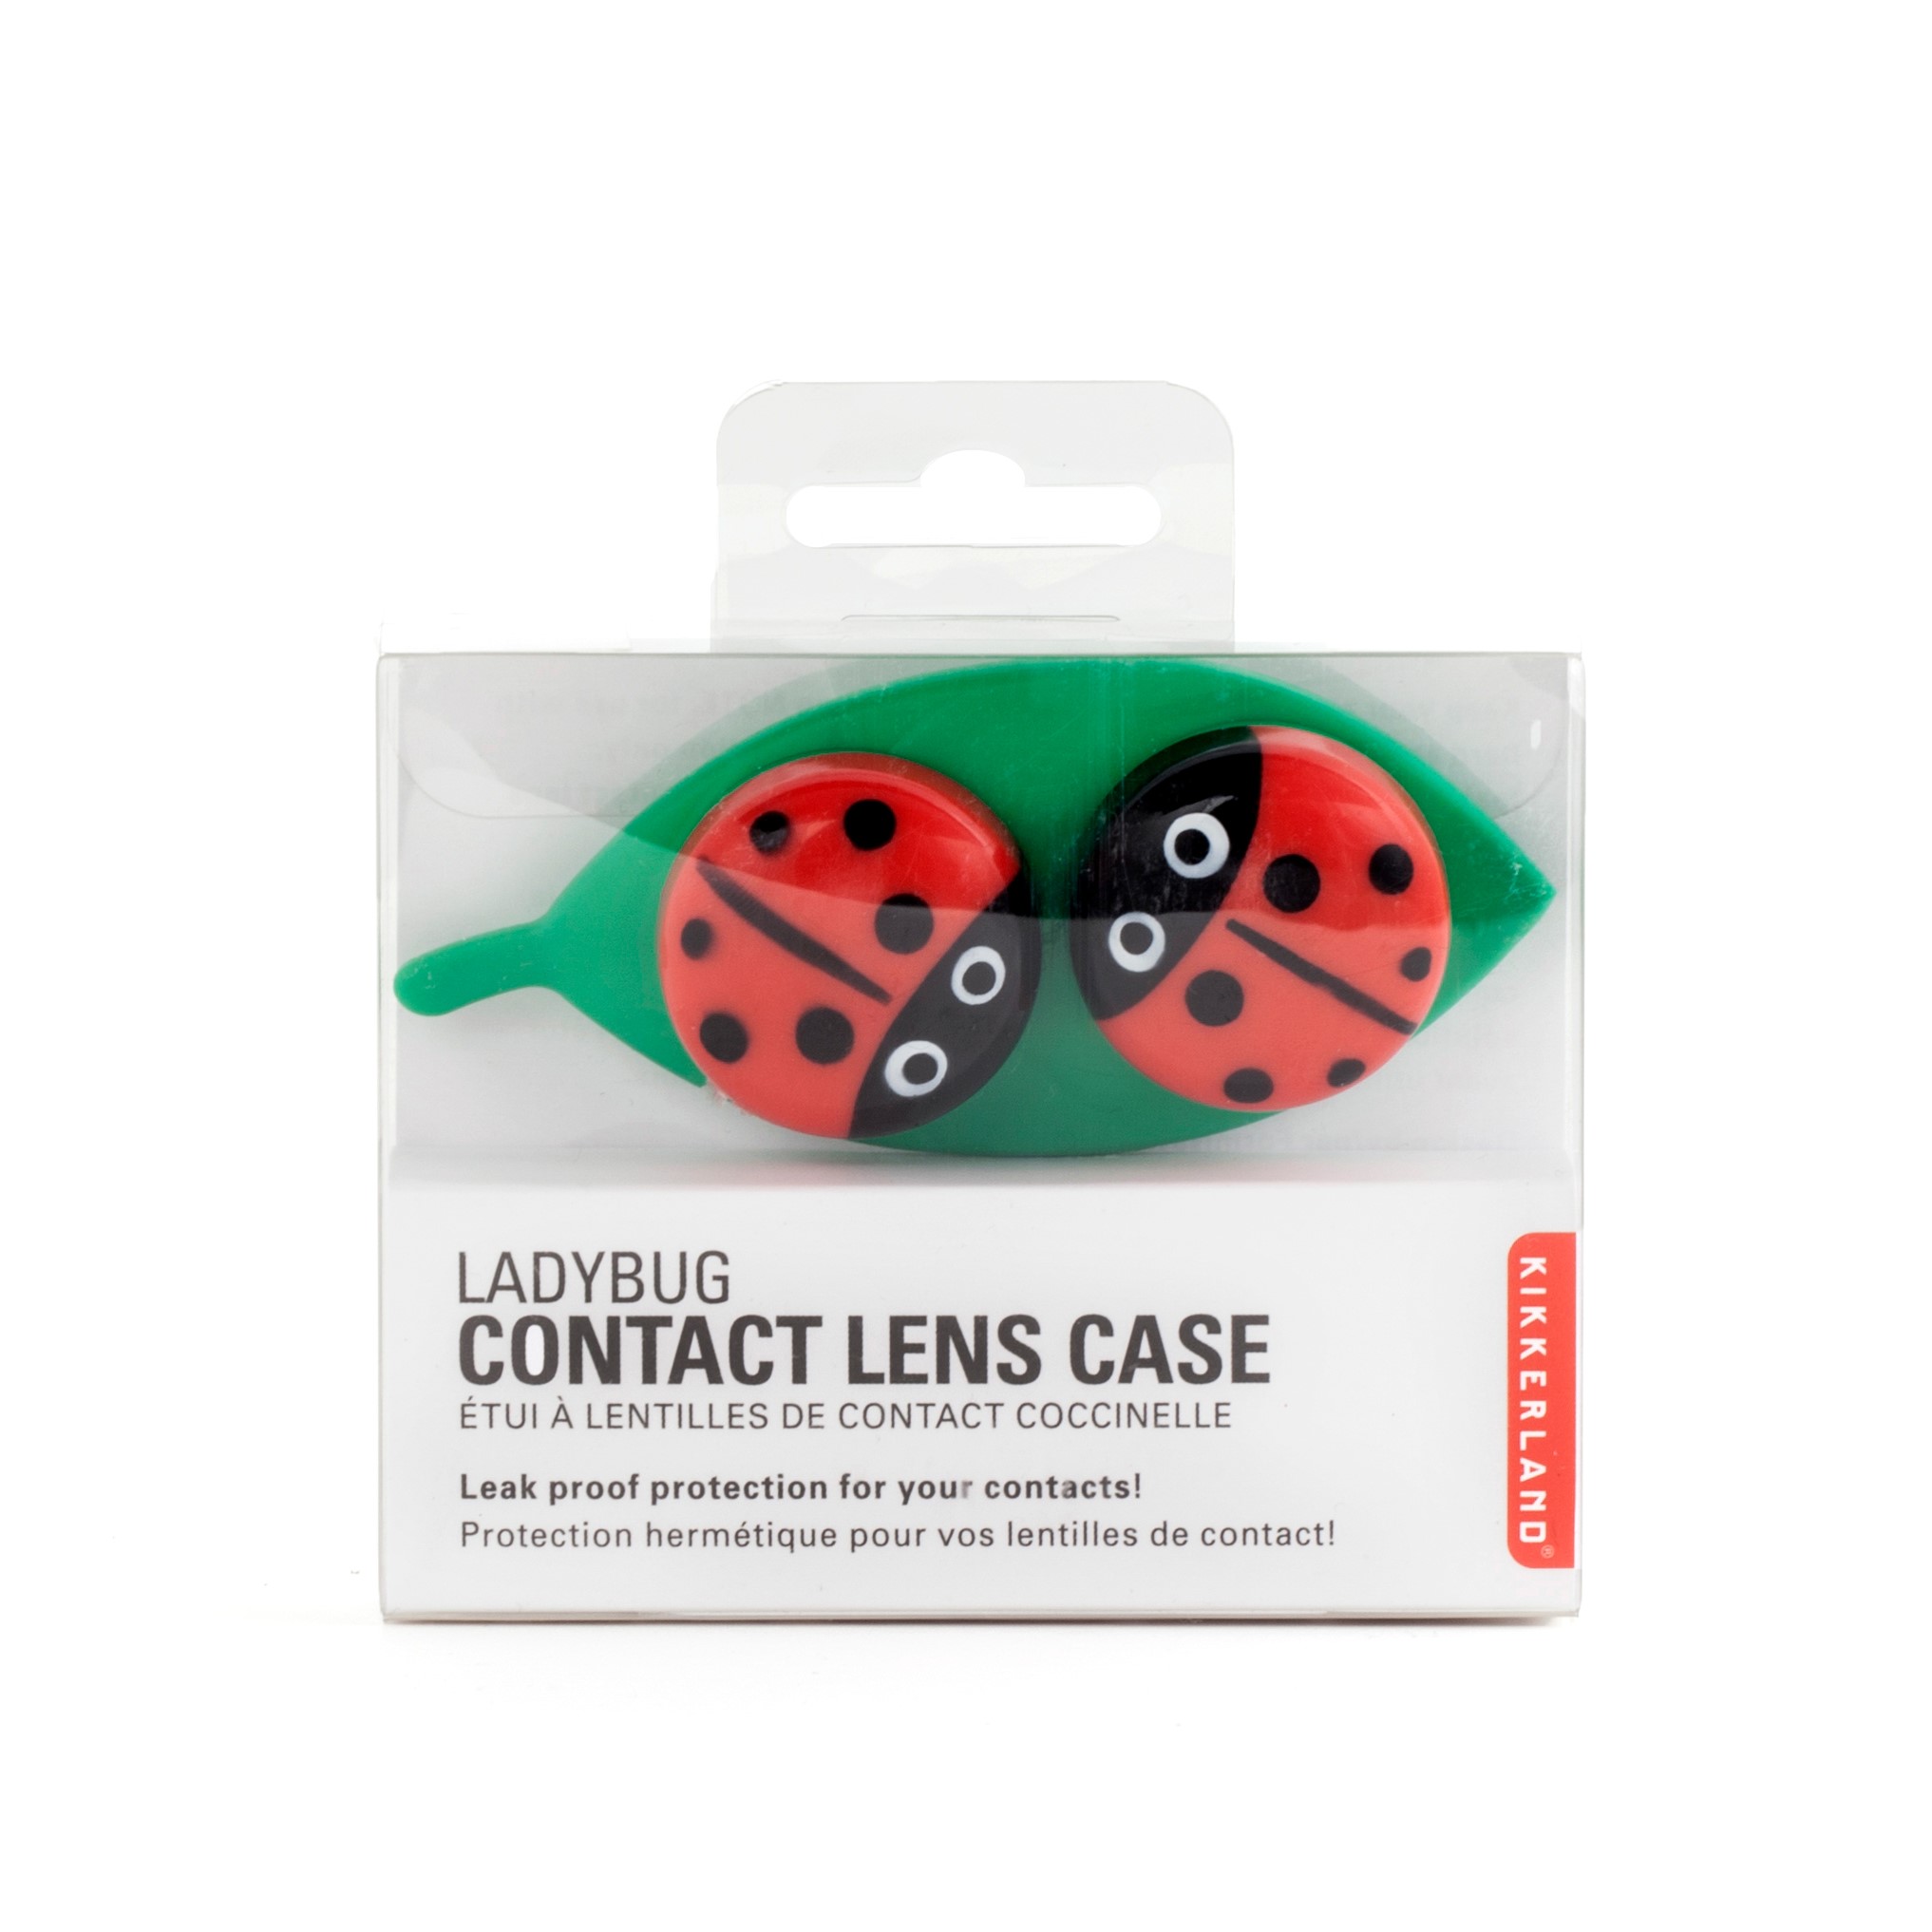 Contact lens case ladybug